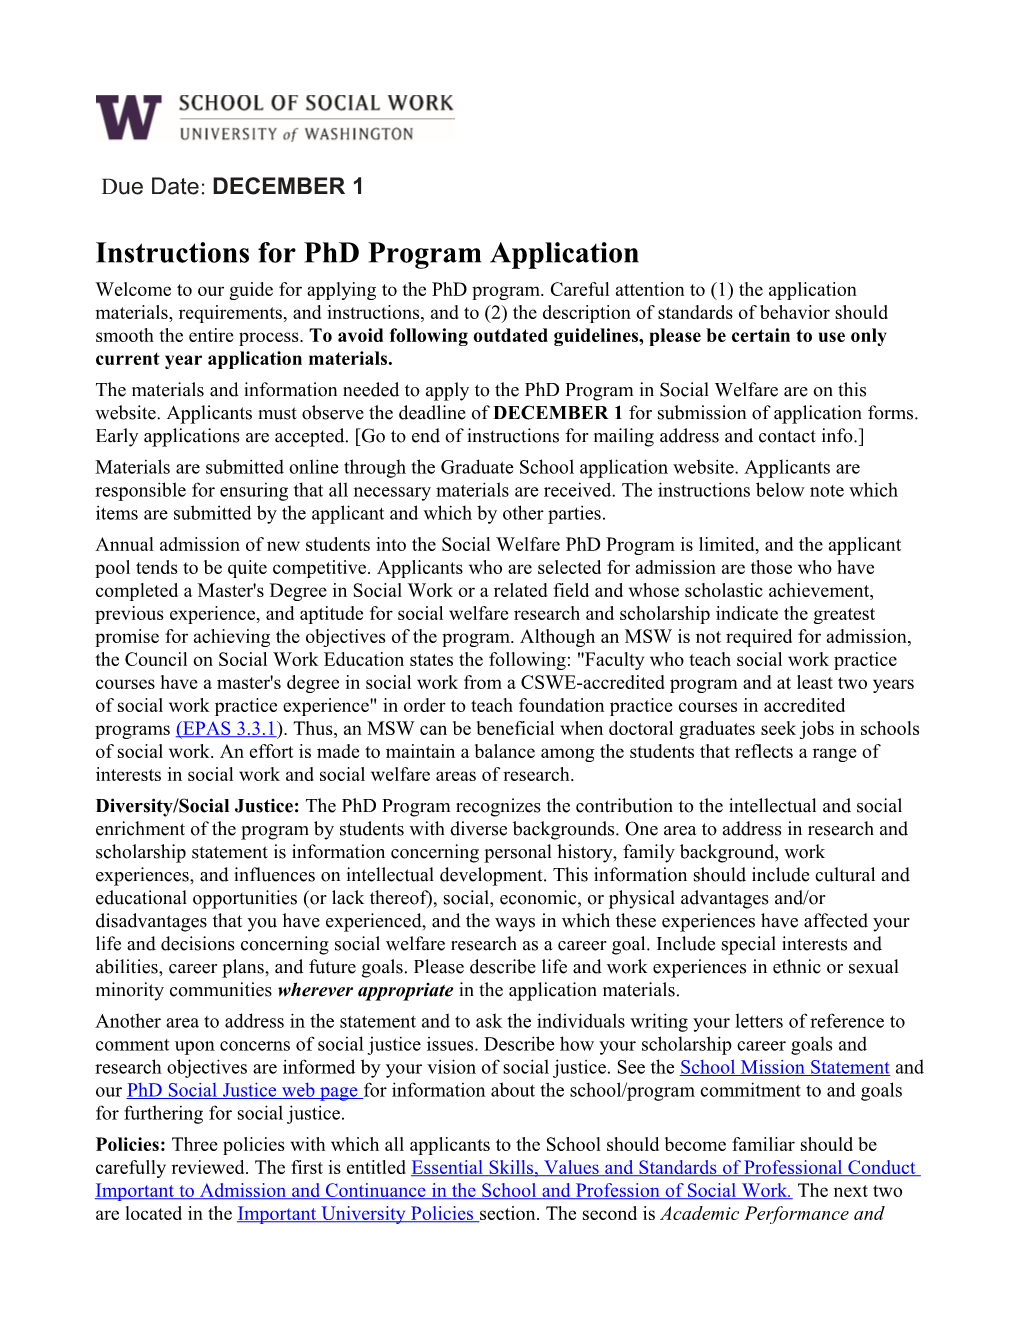 Instructions for Phd Program Application